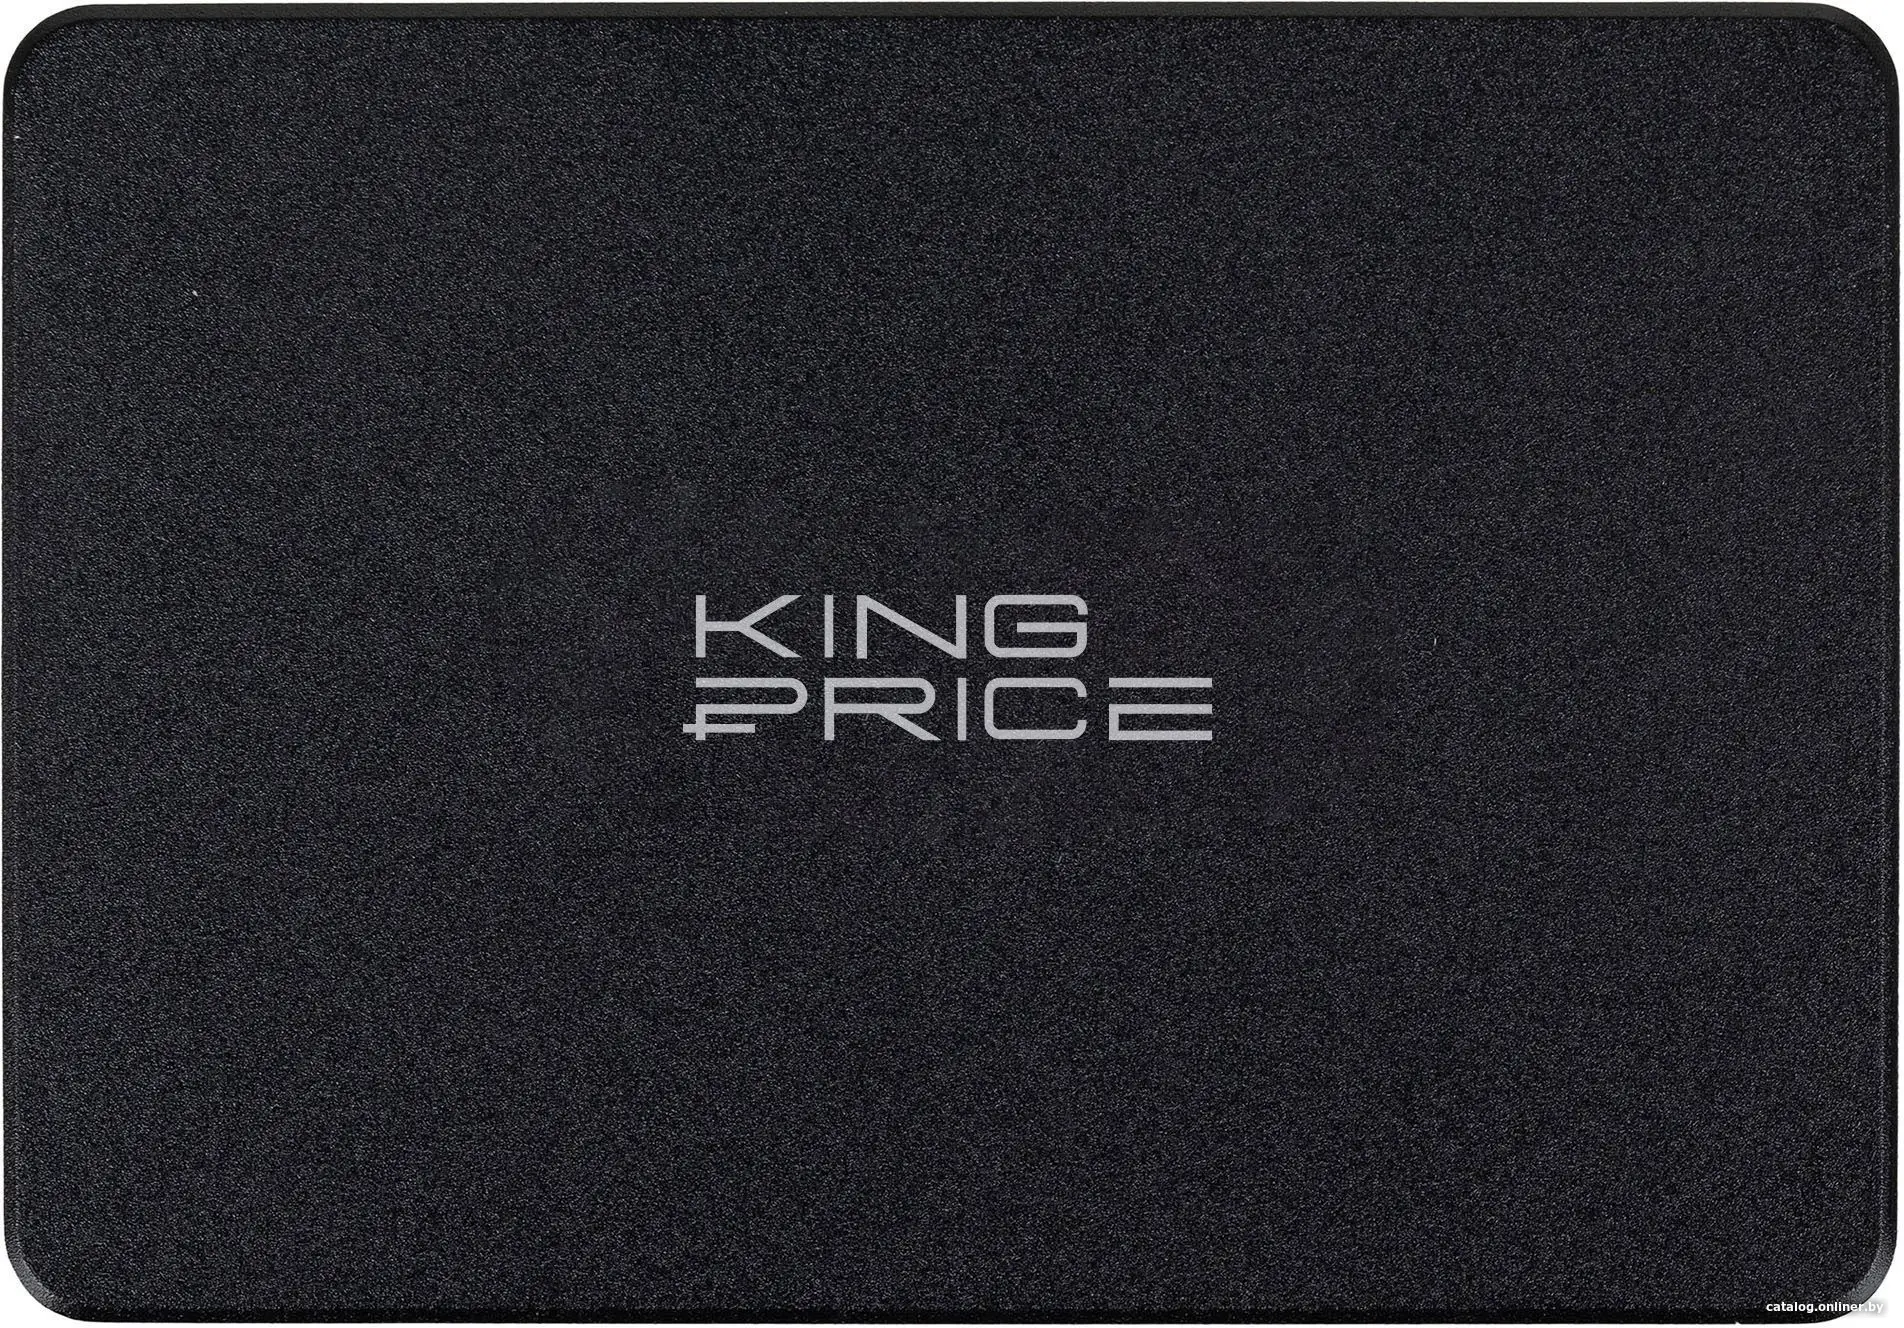 Купить SSD диск KingPrice SATA III 960GB KPSS960G2, цена, опт и розница